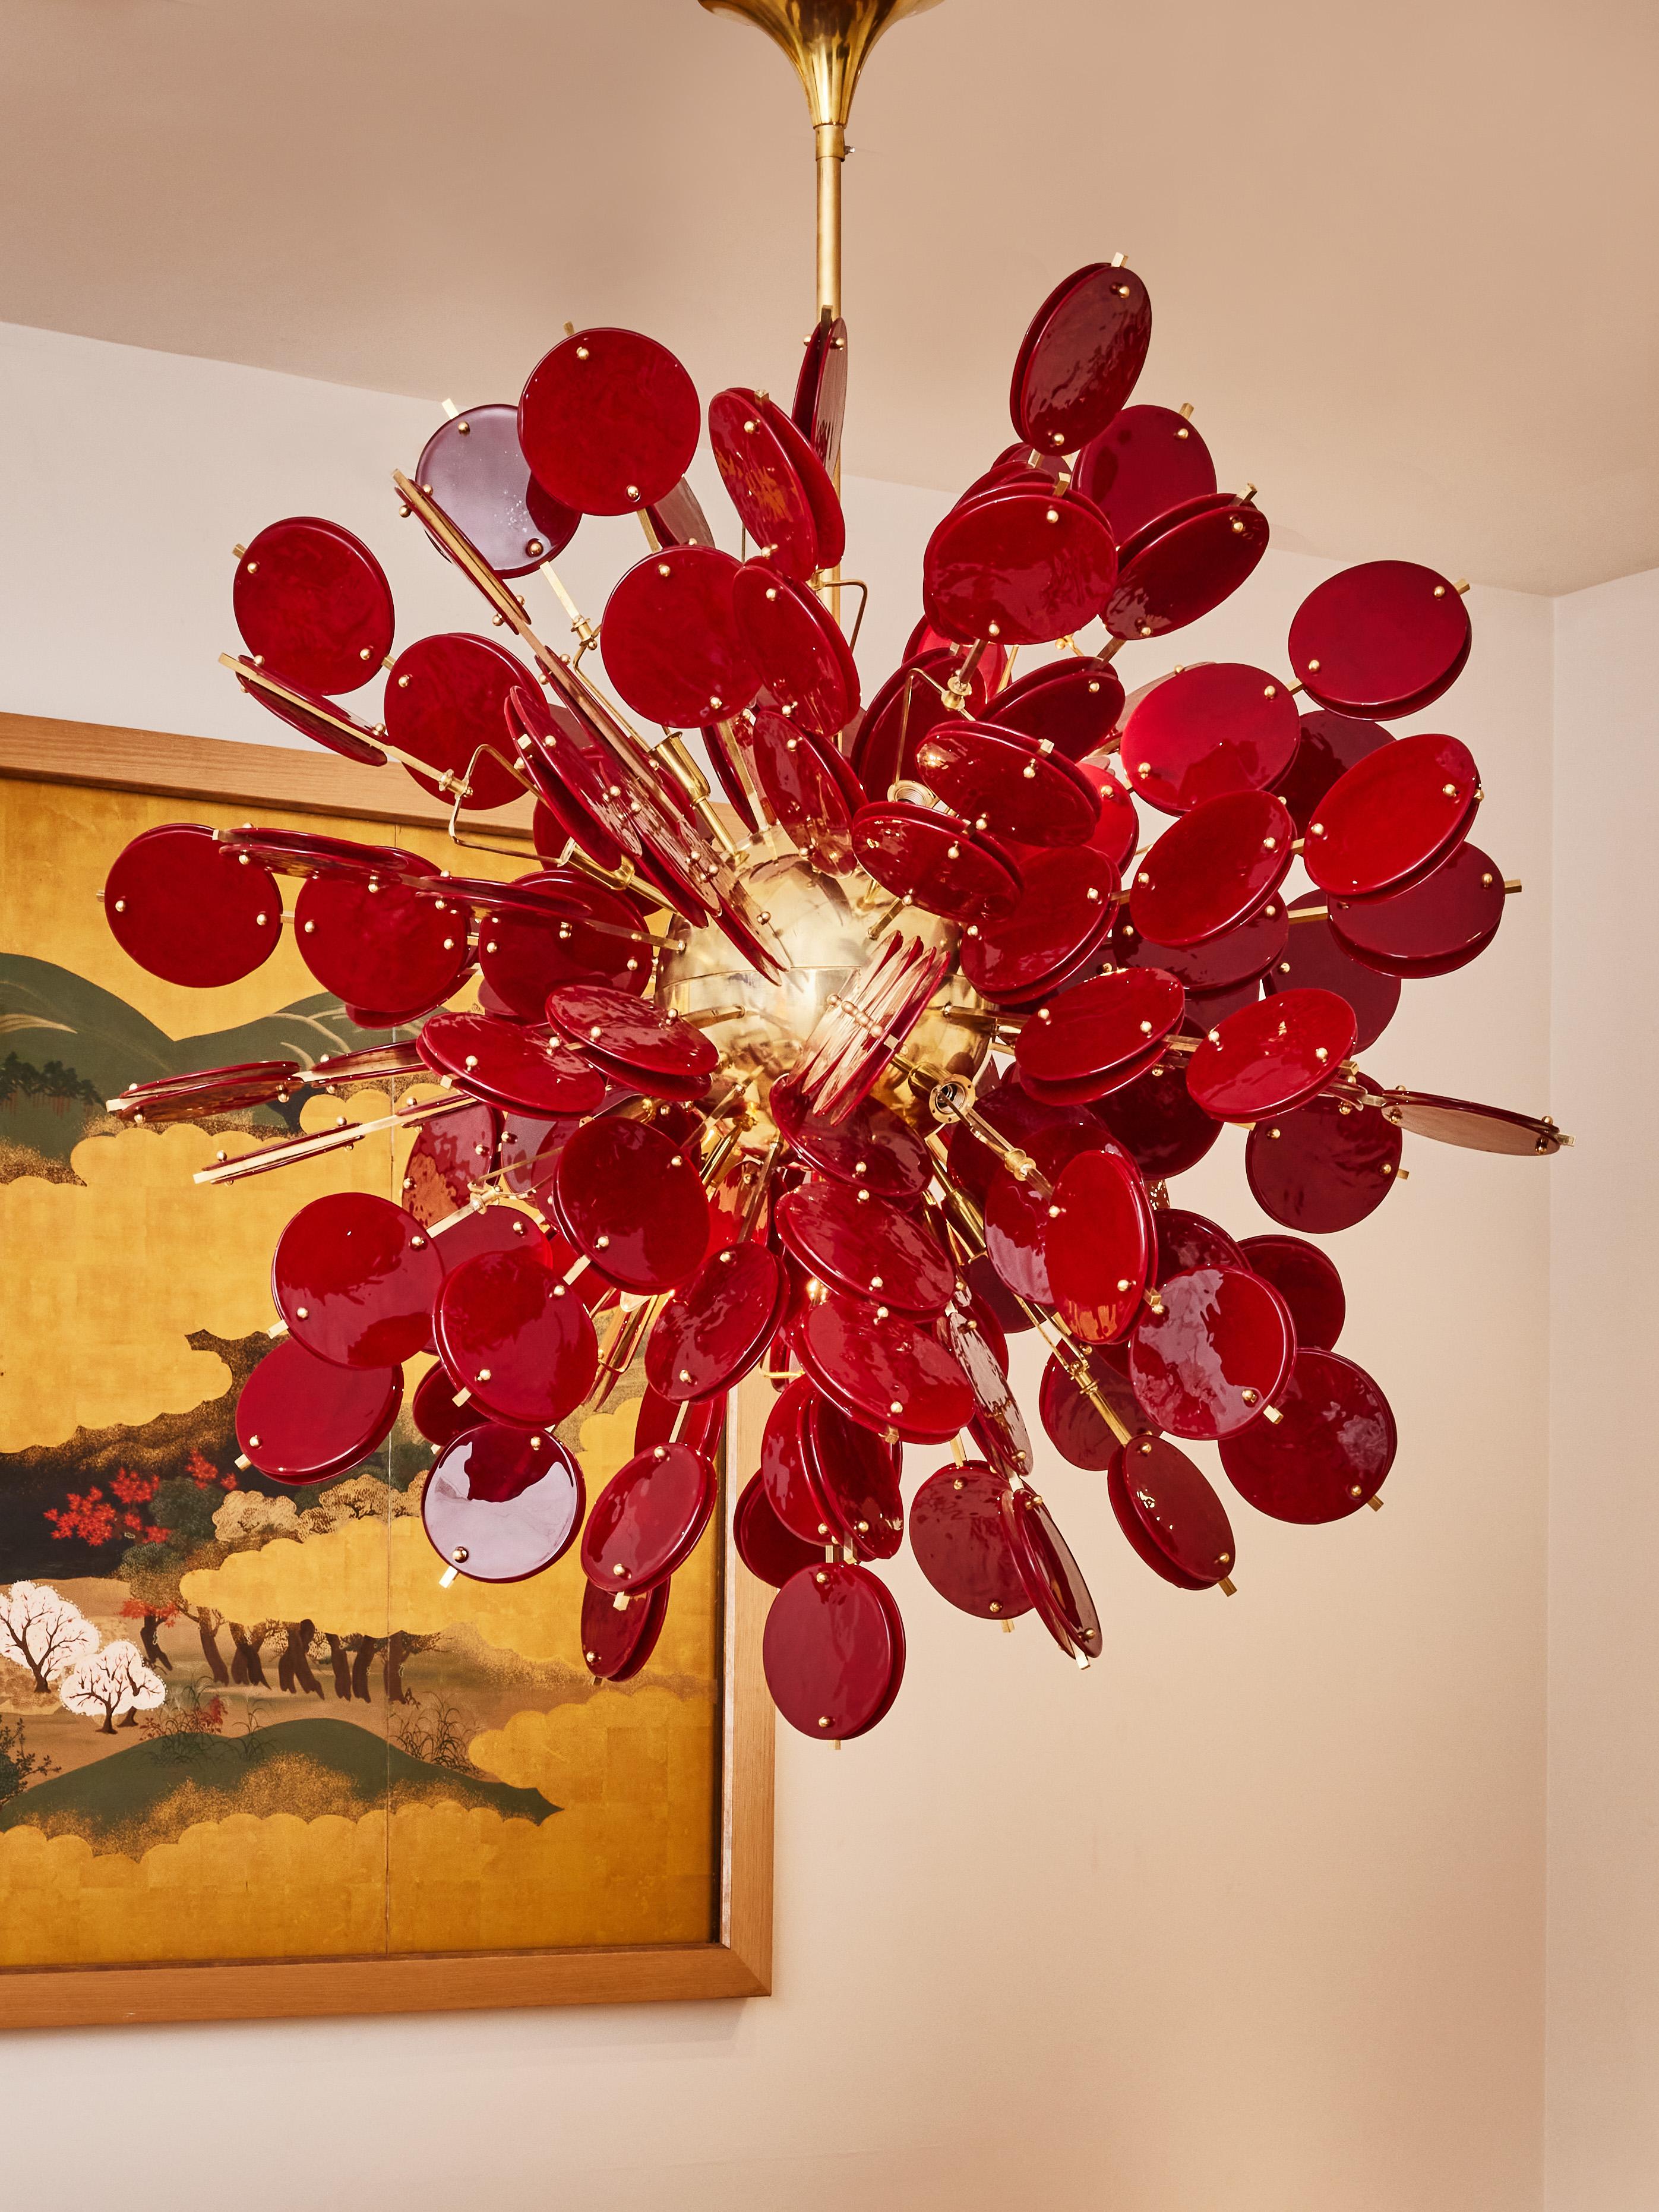 Stunning sputnik chandelier in brass with burgundy tainted Murano glass pellets.
Creation by Studio Glustin.
Italy, 2023